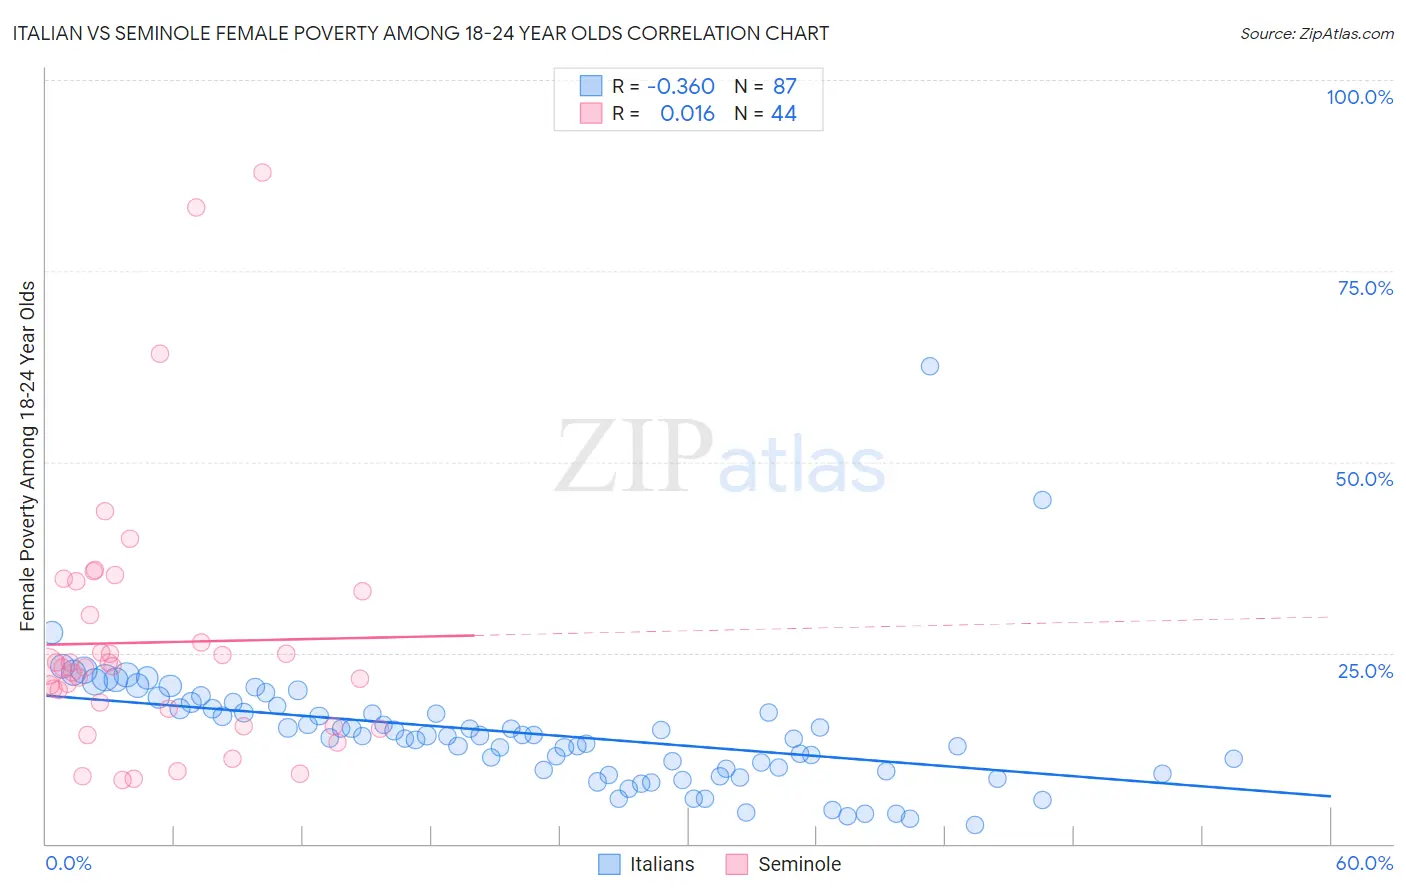 Italian vs Seminole Female Poverty Among 18-24 Year Olds